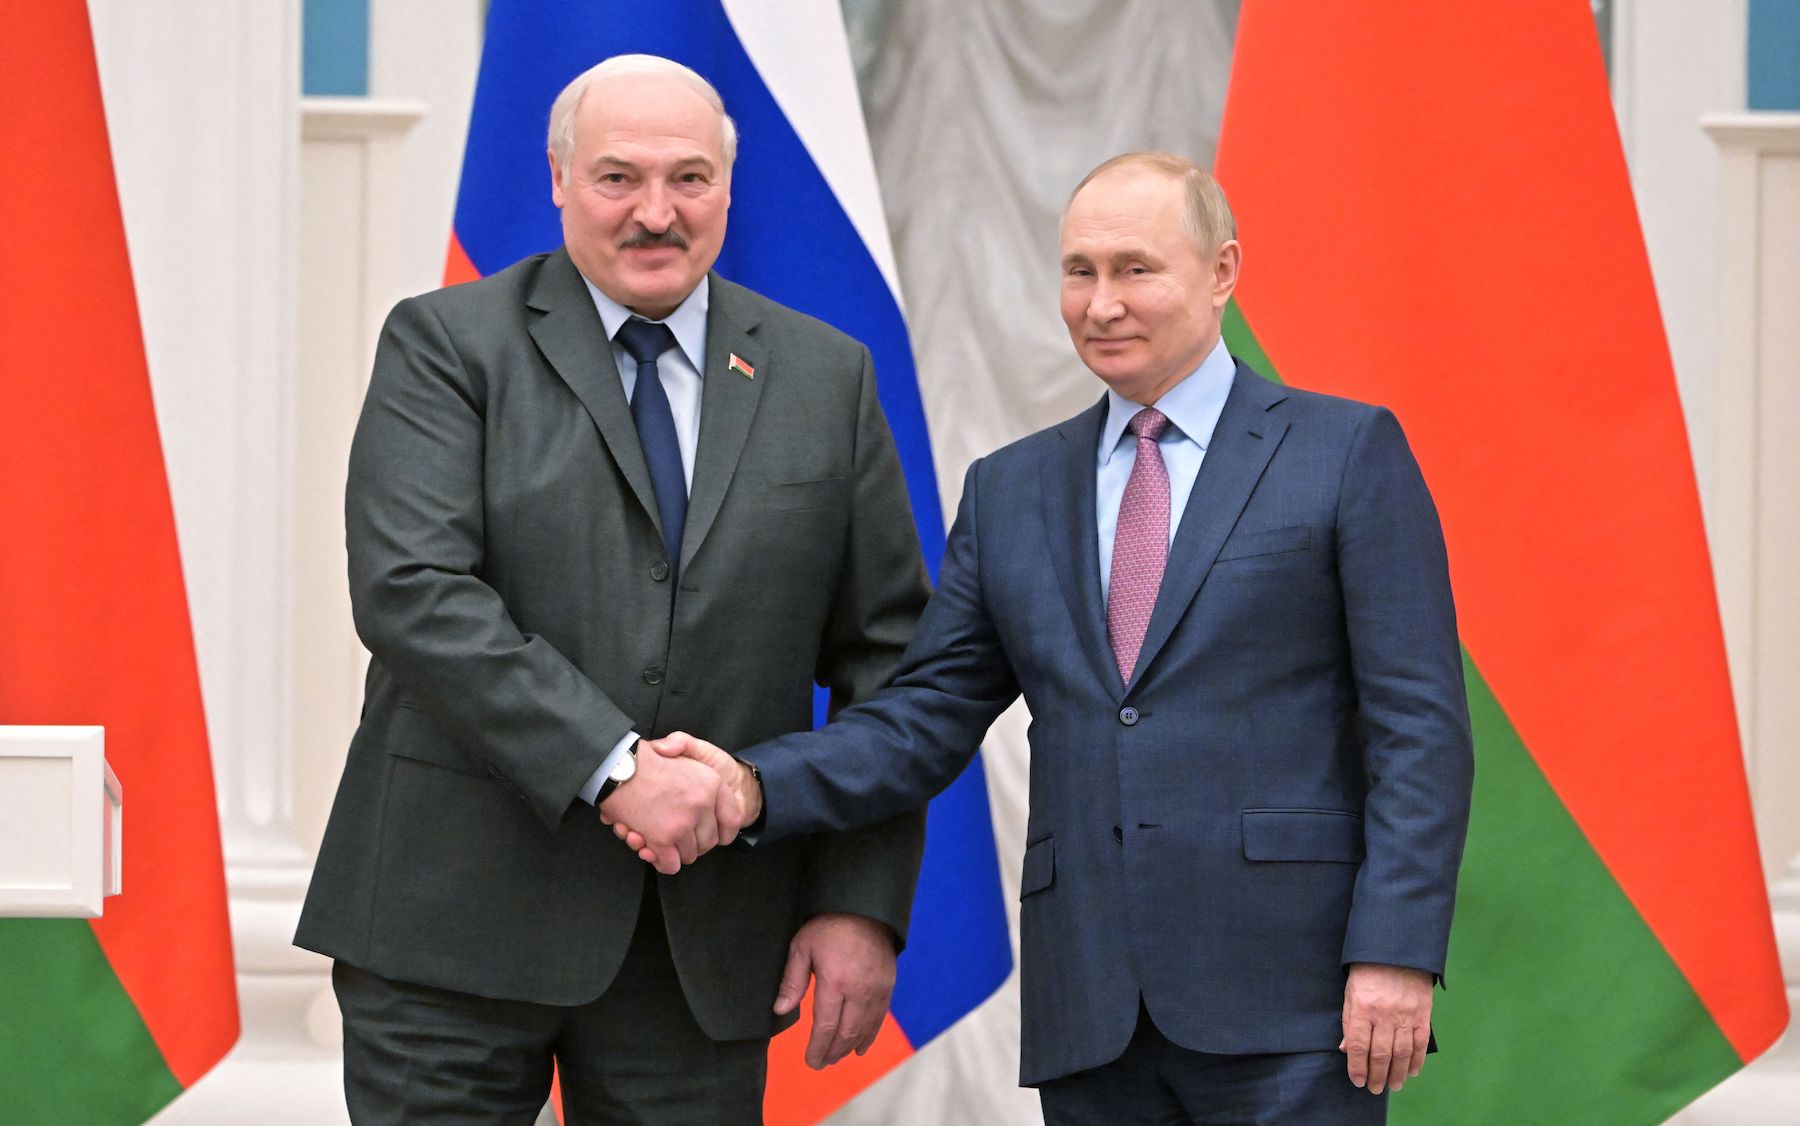 Russia's president Putin shakes hands with Belarus' president Aleksander Lukashenko